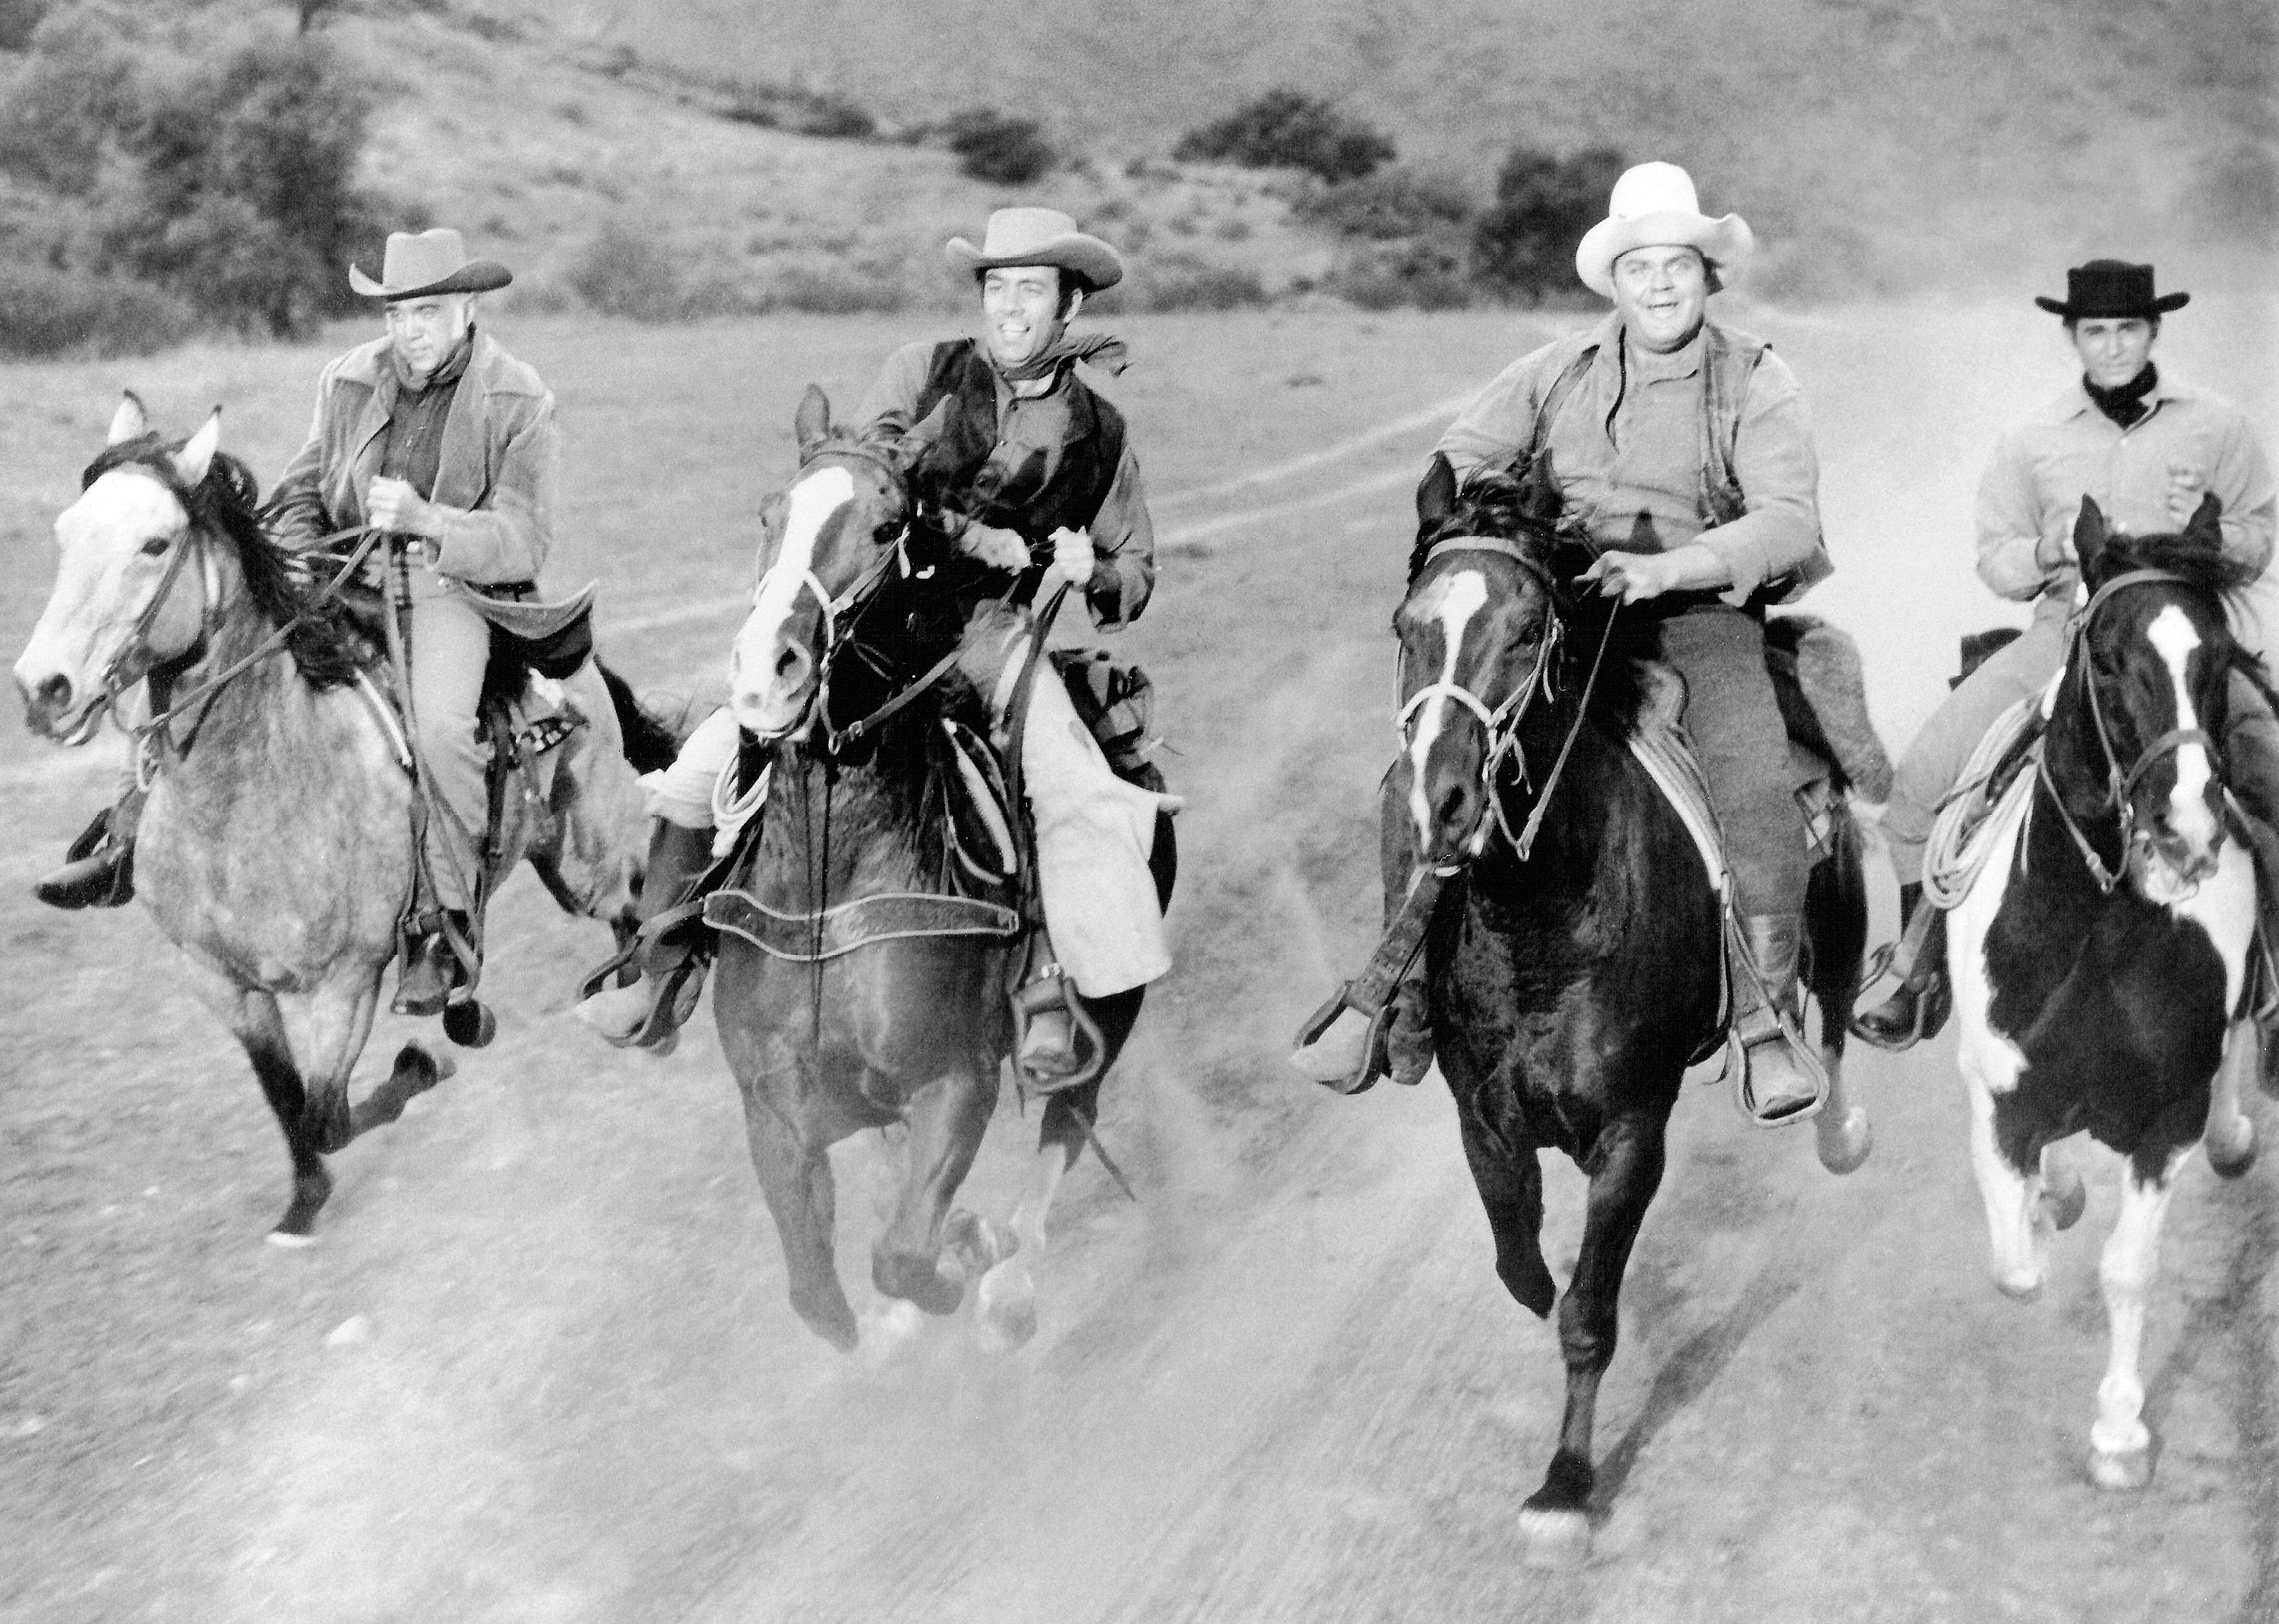 Members of the cast of the TV western series 'Bonanza' on horseback.